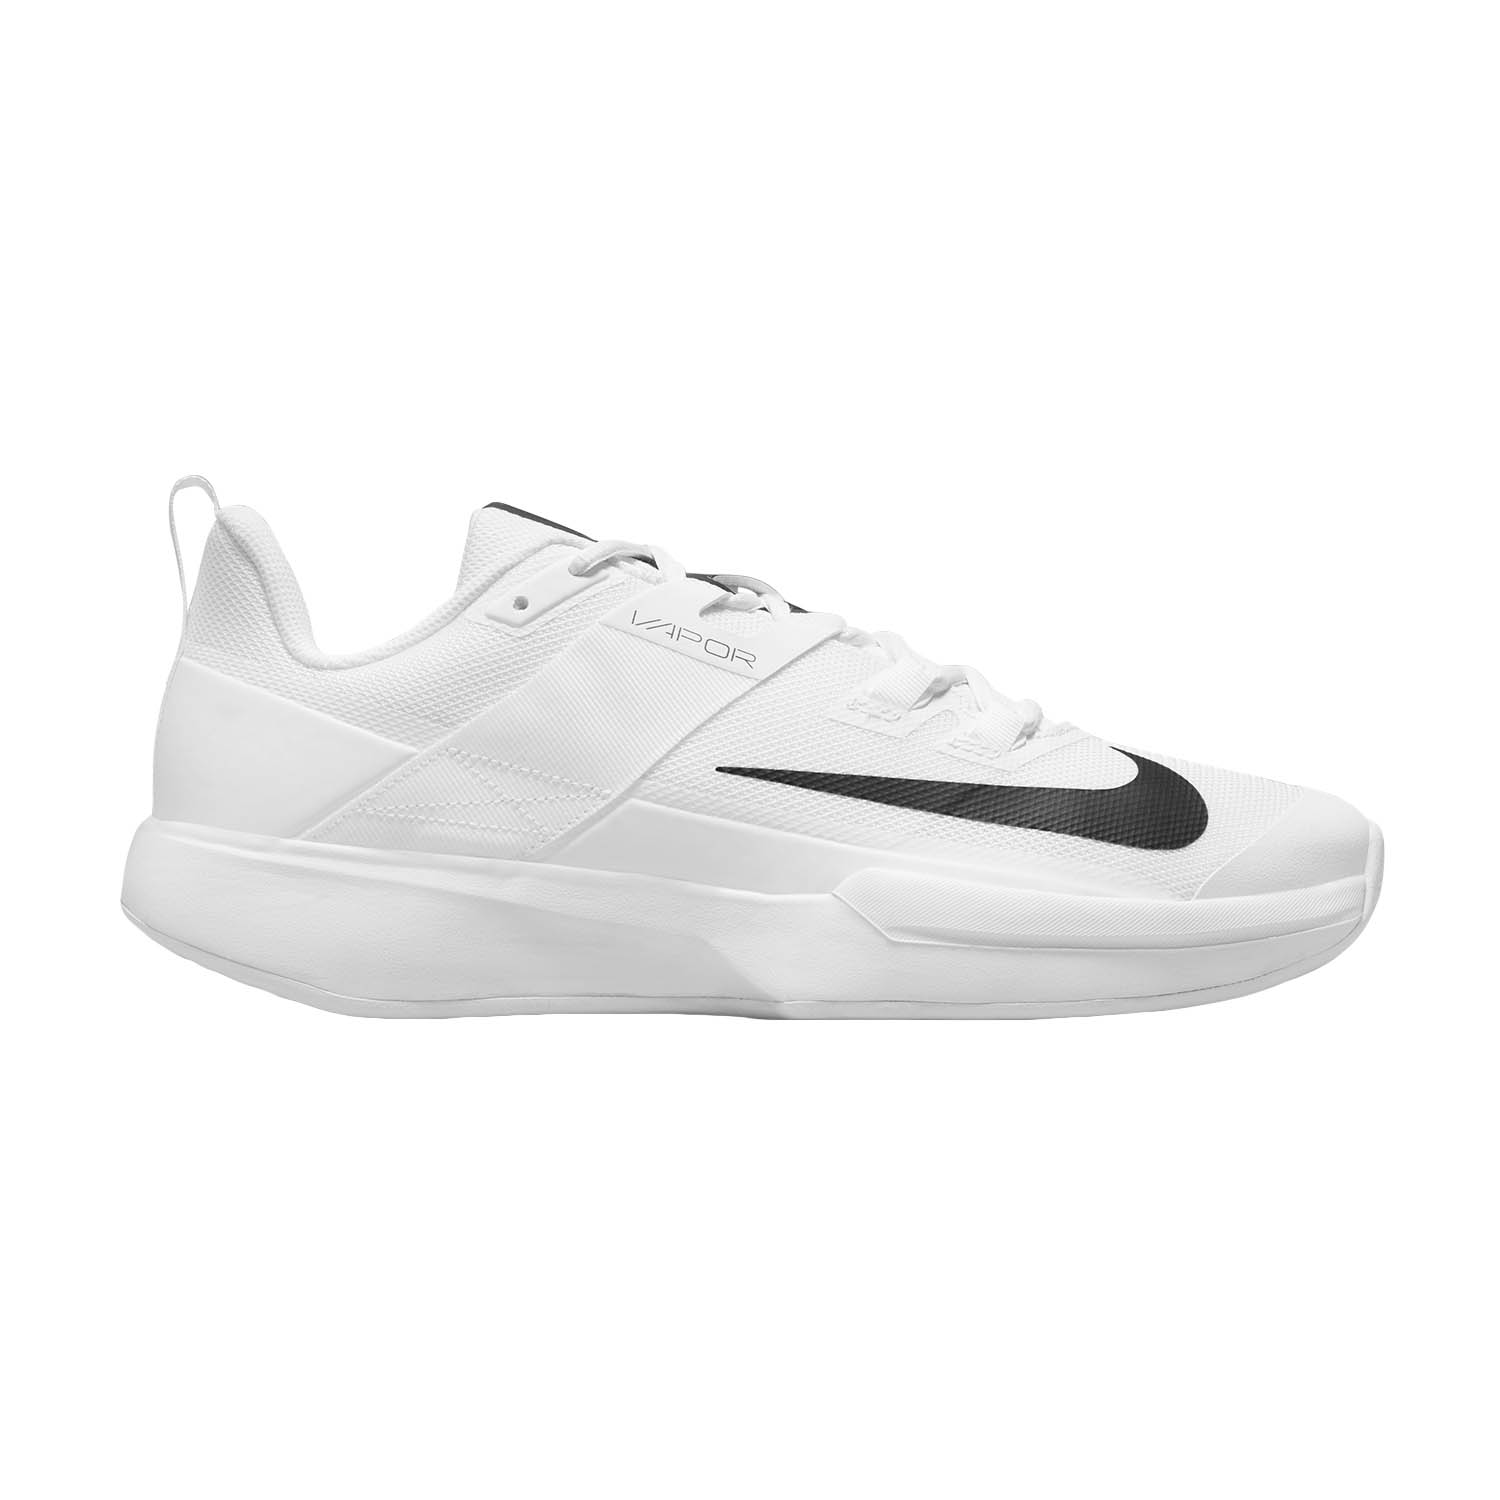 Nike Vapor Lite Zapatillas de Tenis Hombre White/Black